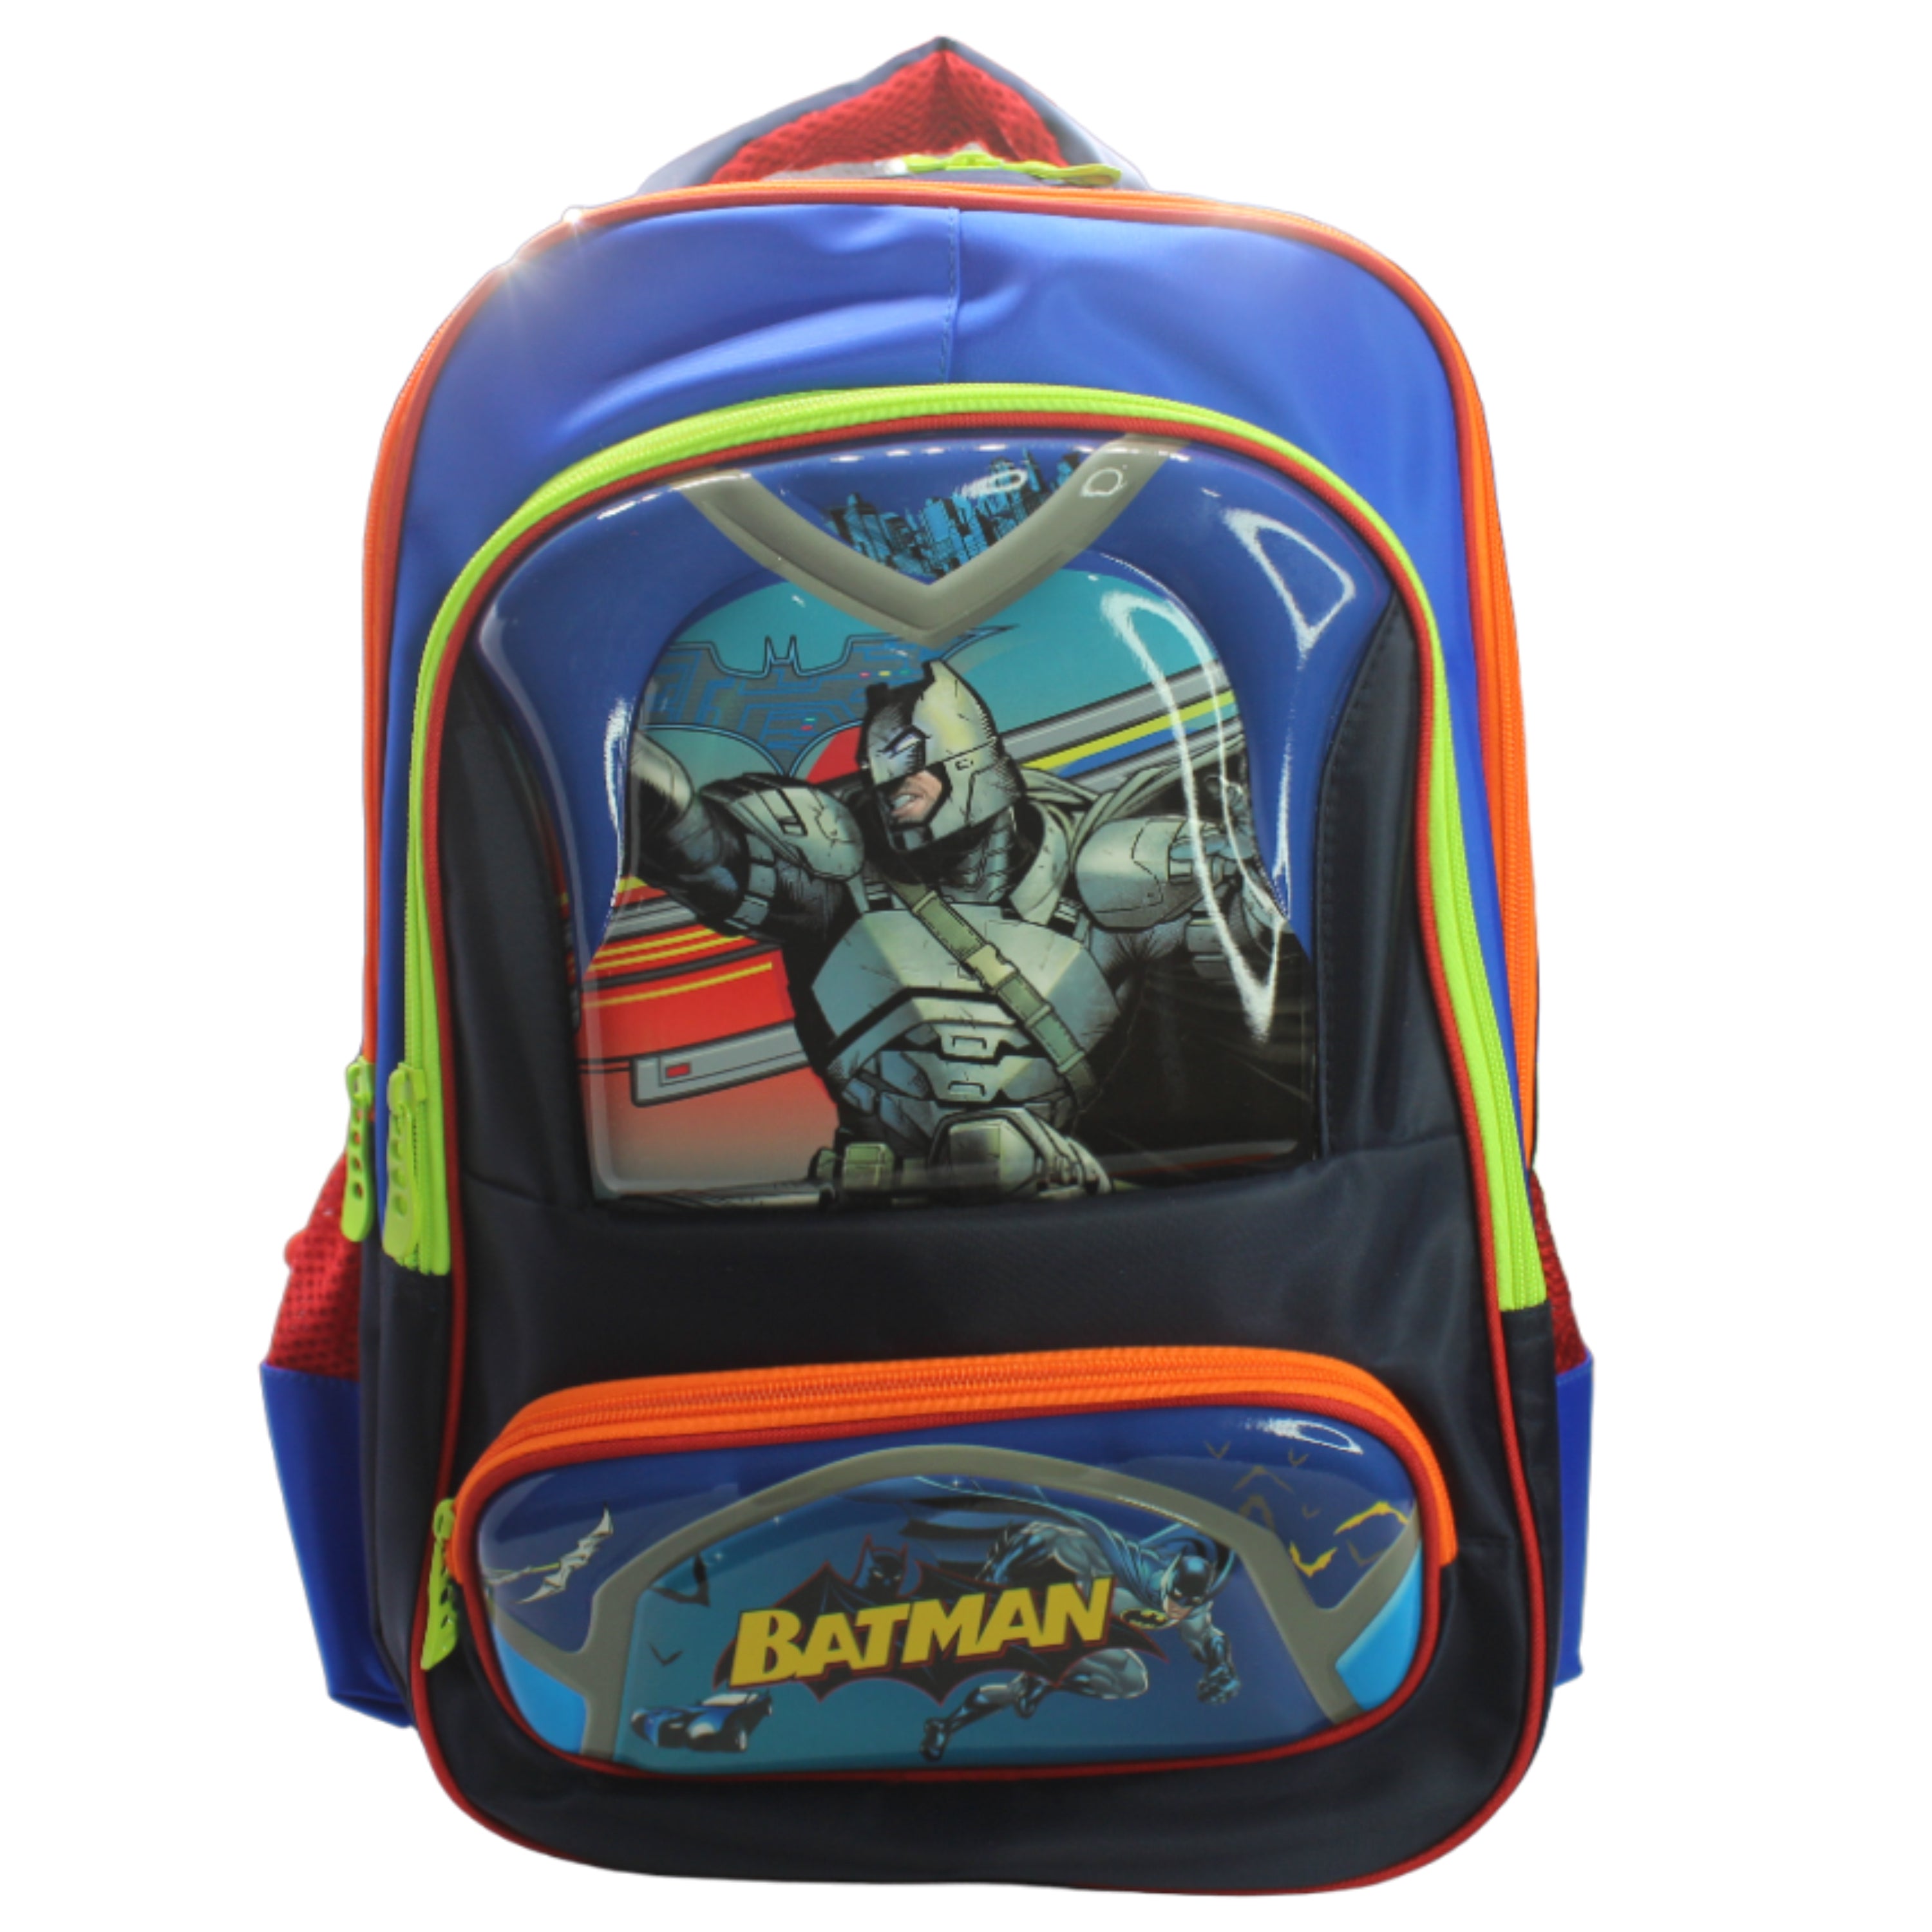 Batman School Bag for Kids Class 4 to 8